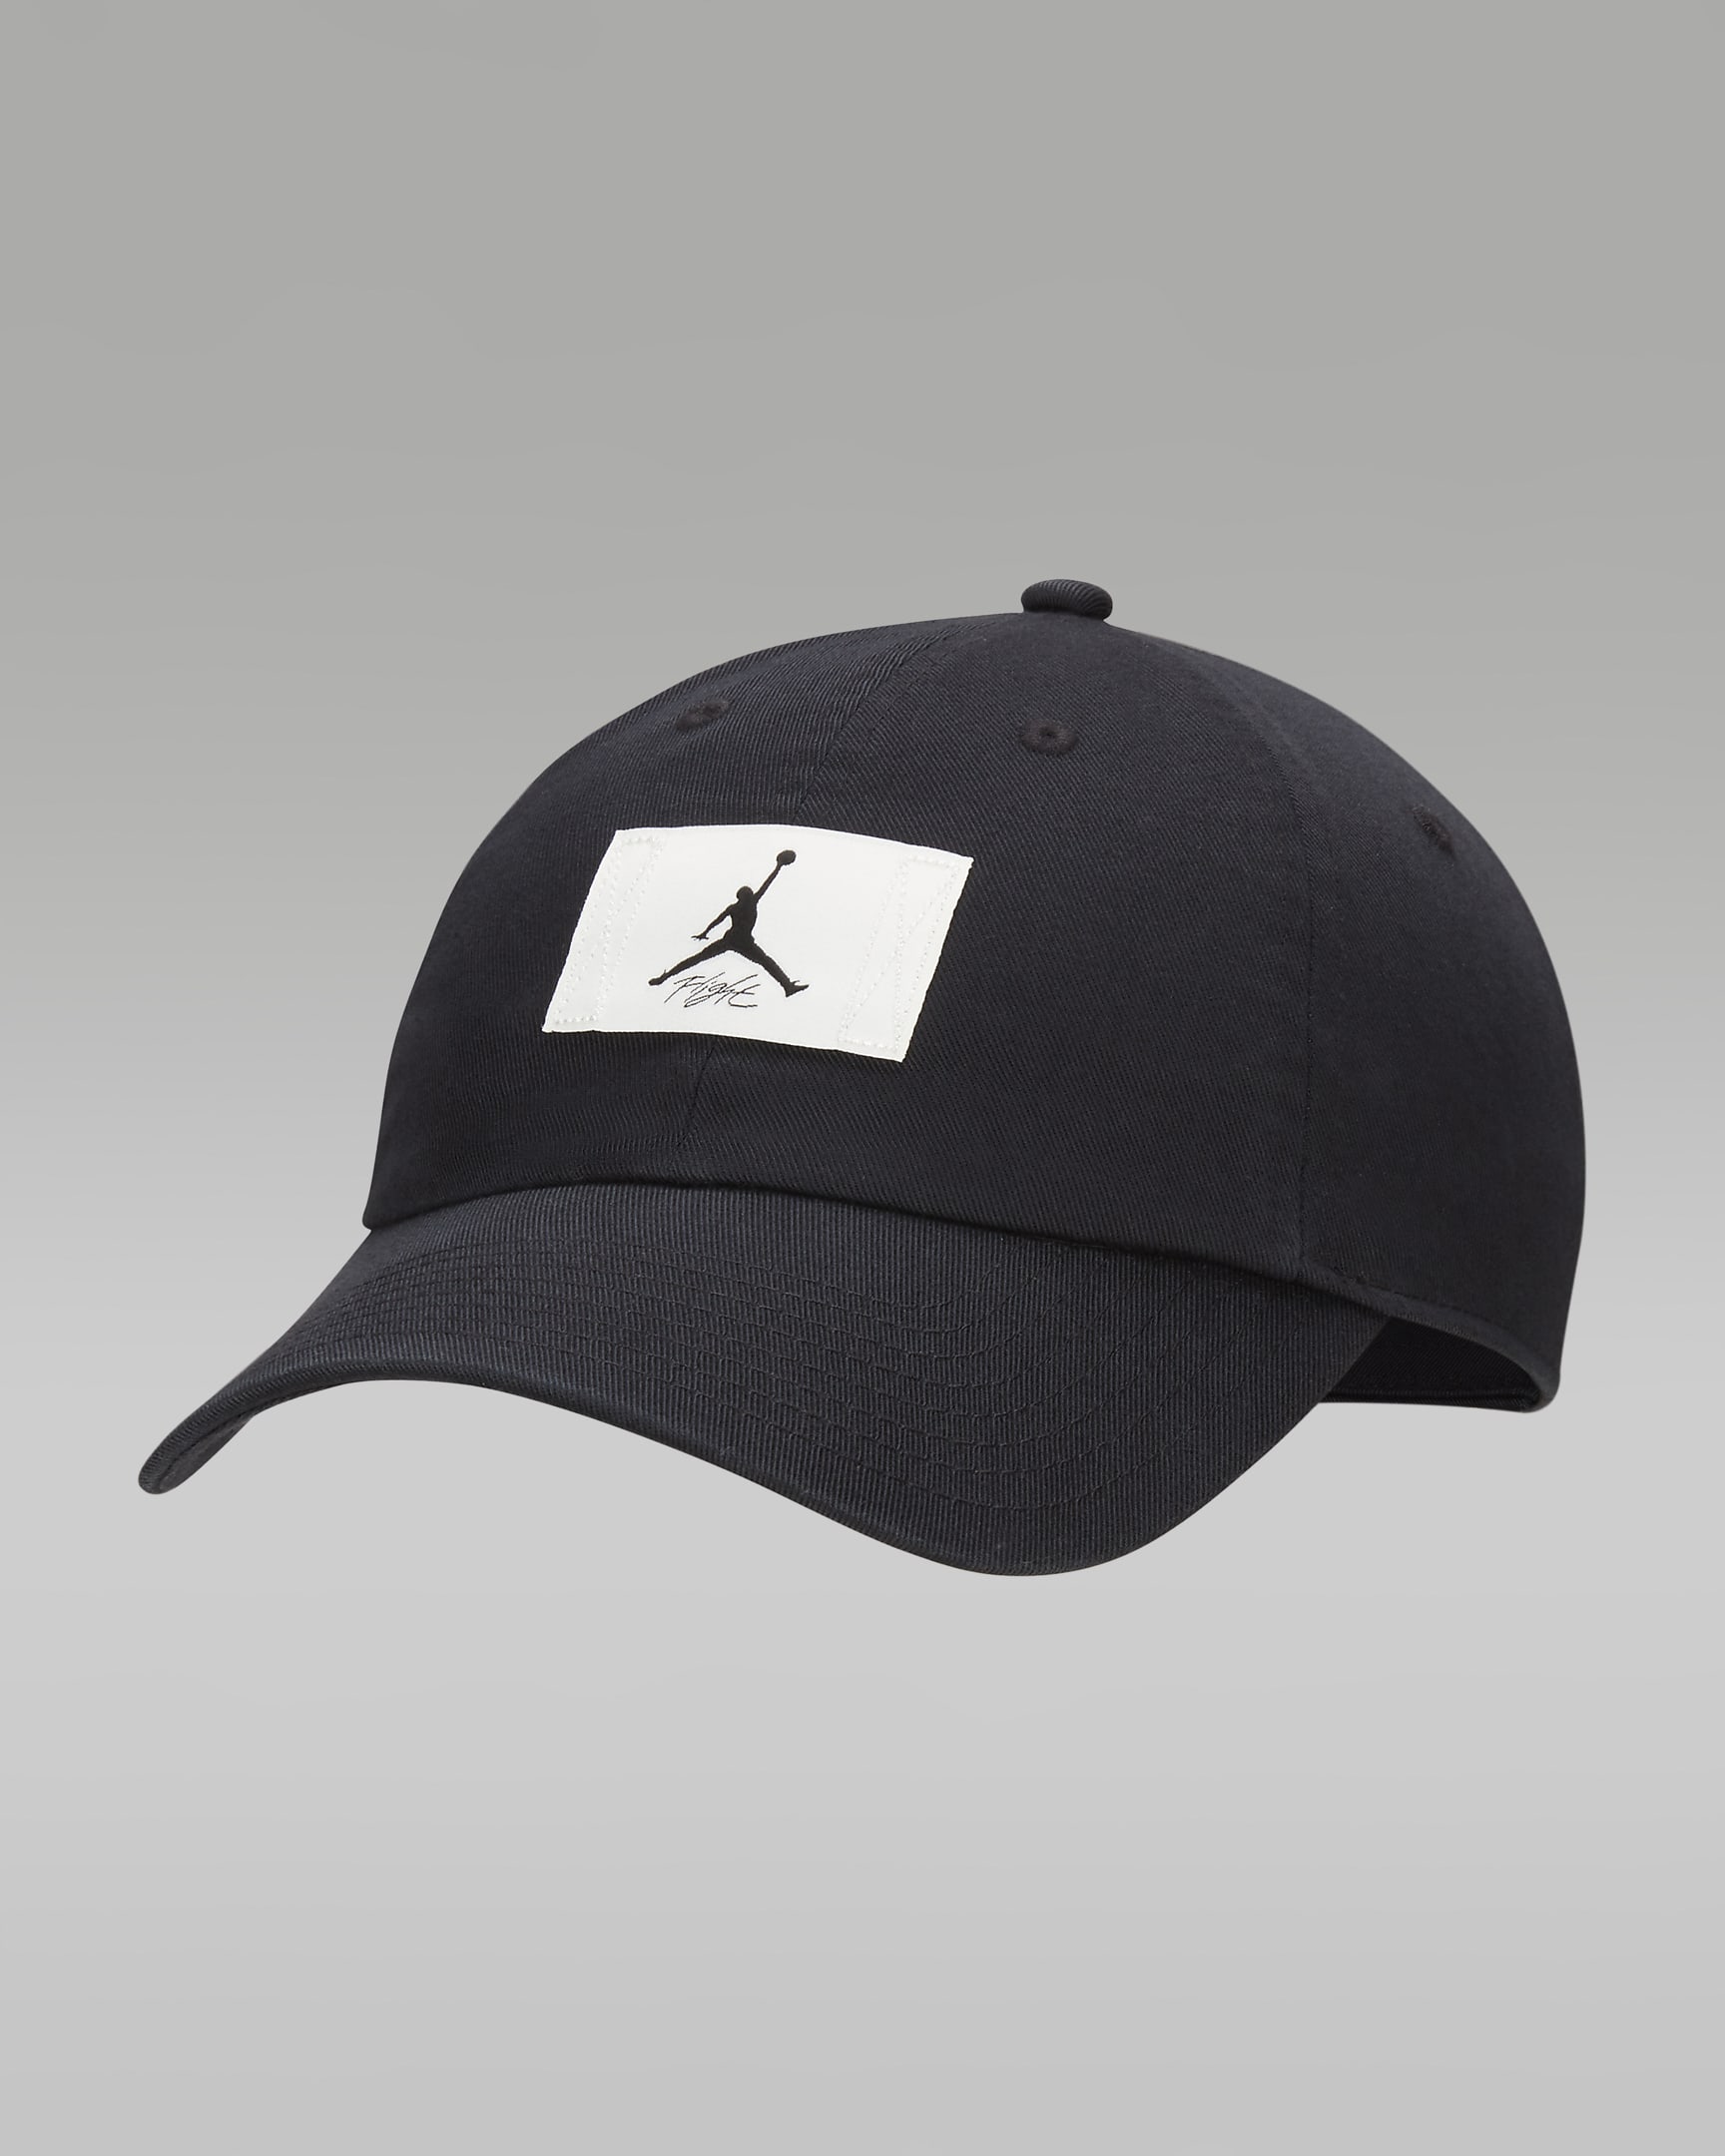 Jordan Club Cap Adjustable Hat - Black/Sail/Black